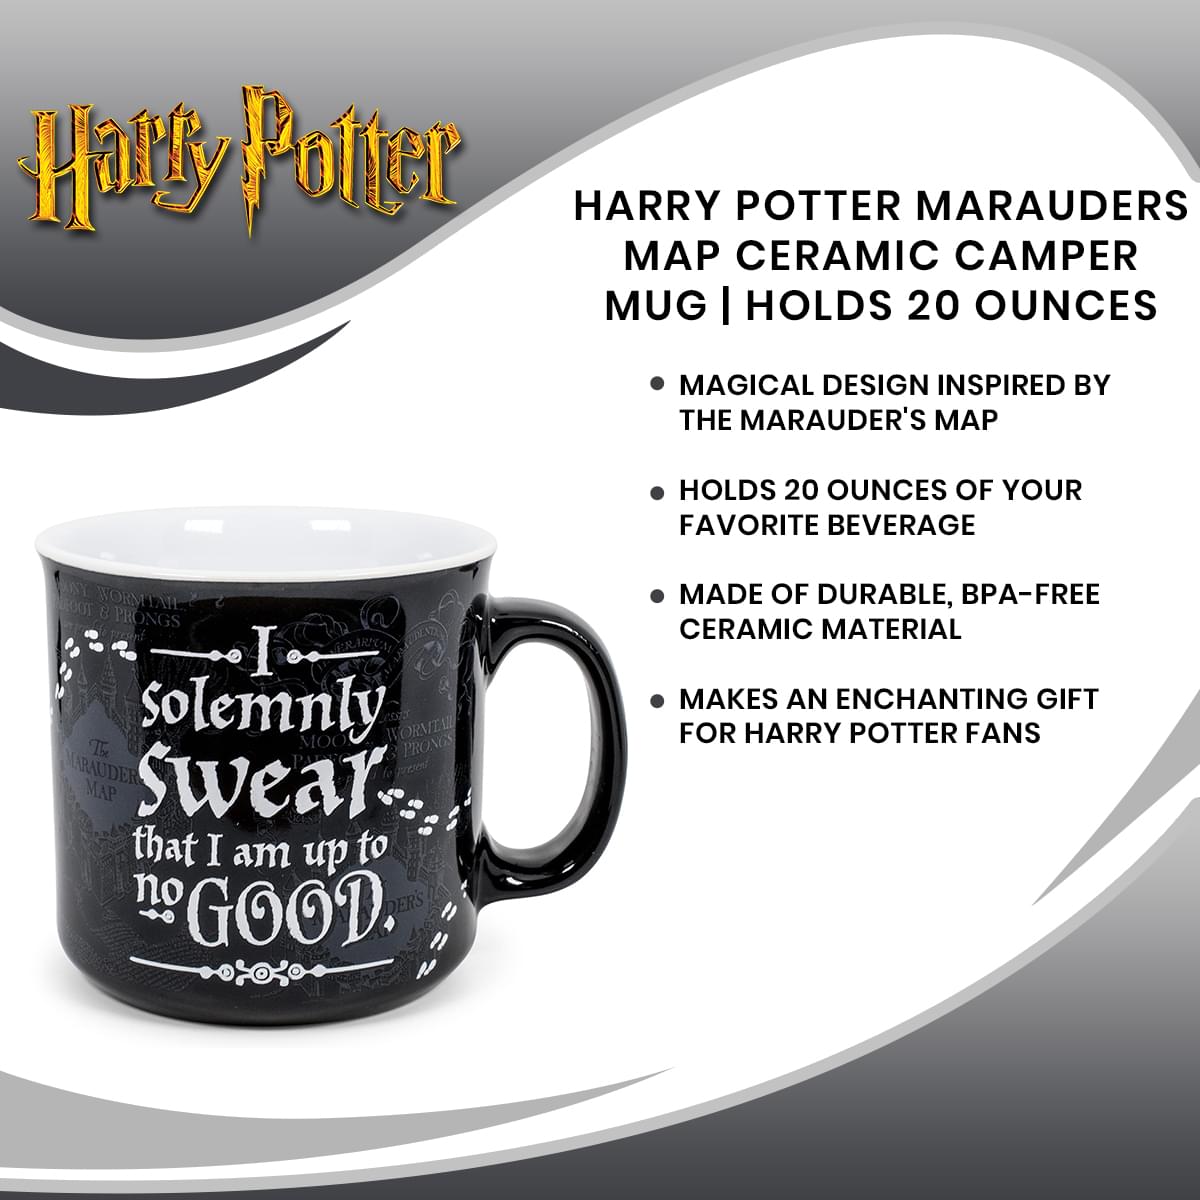 Harry Potter Marauders Map Ceramic Camper Mug | Holds 20 Ounces